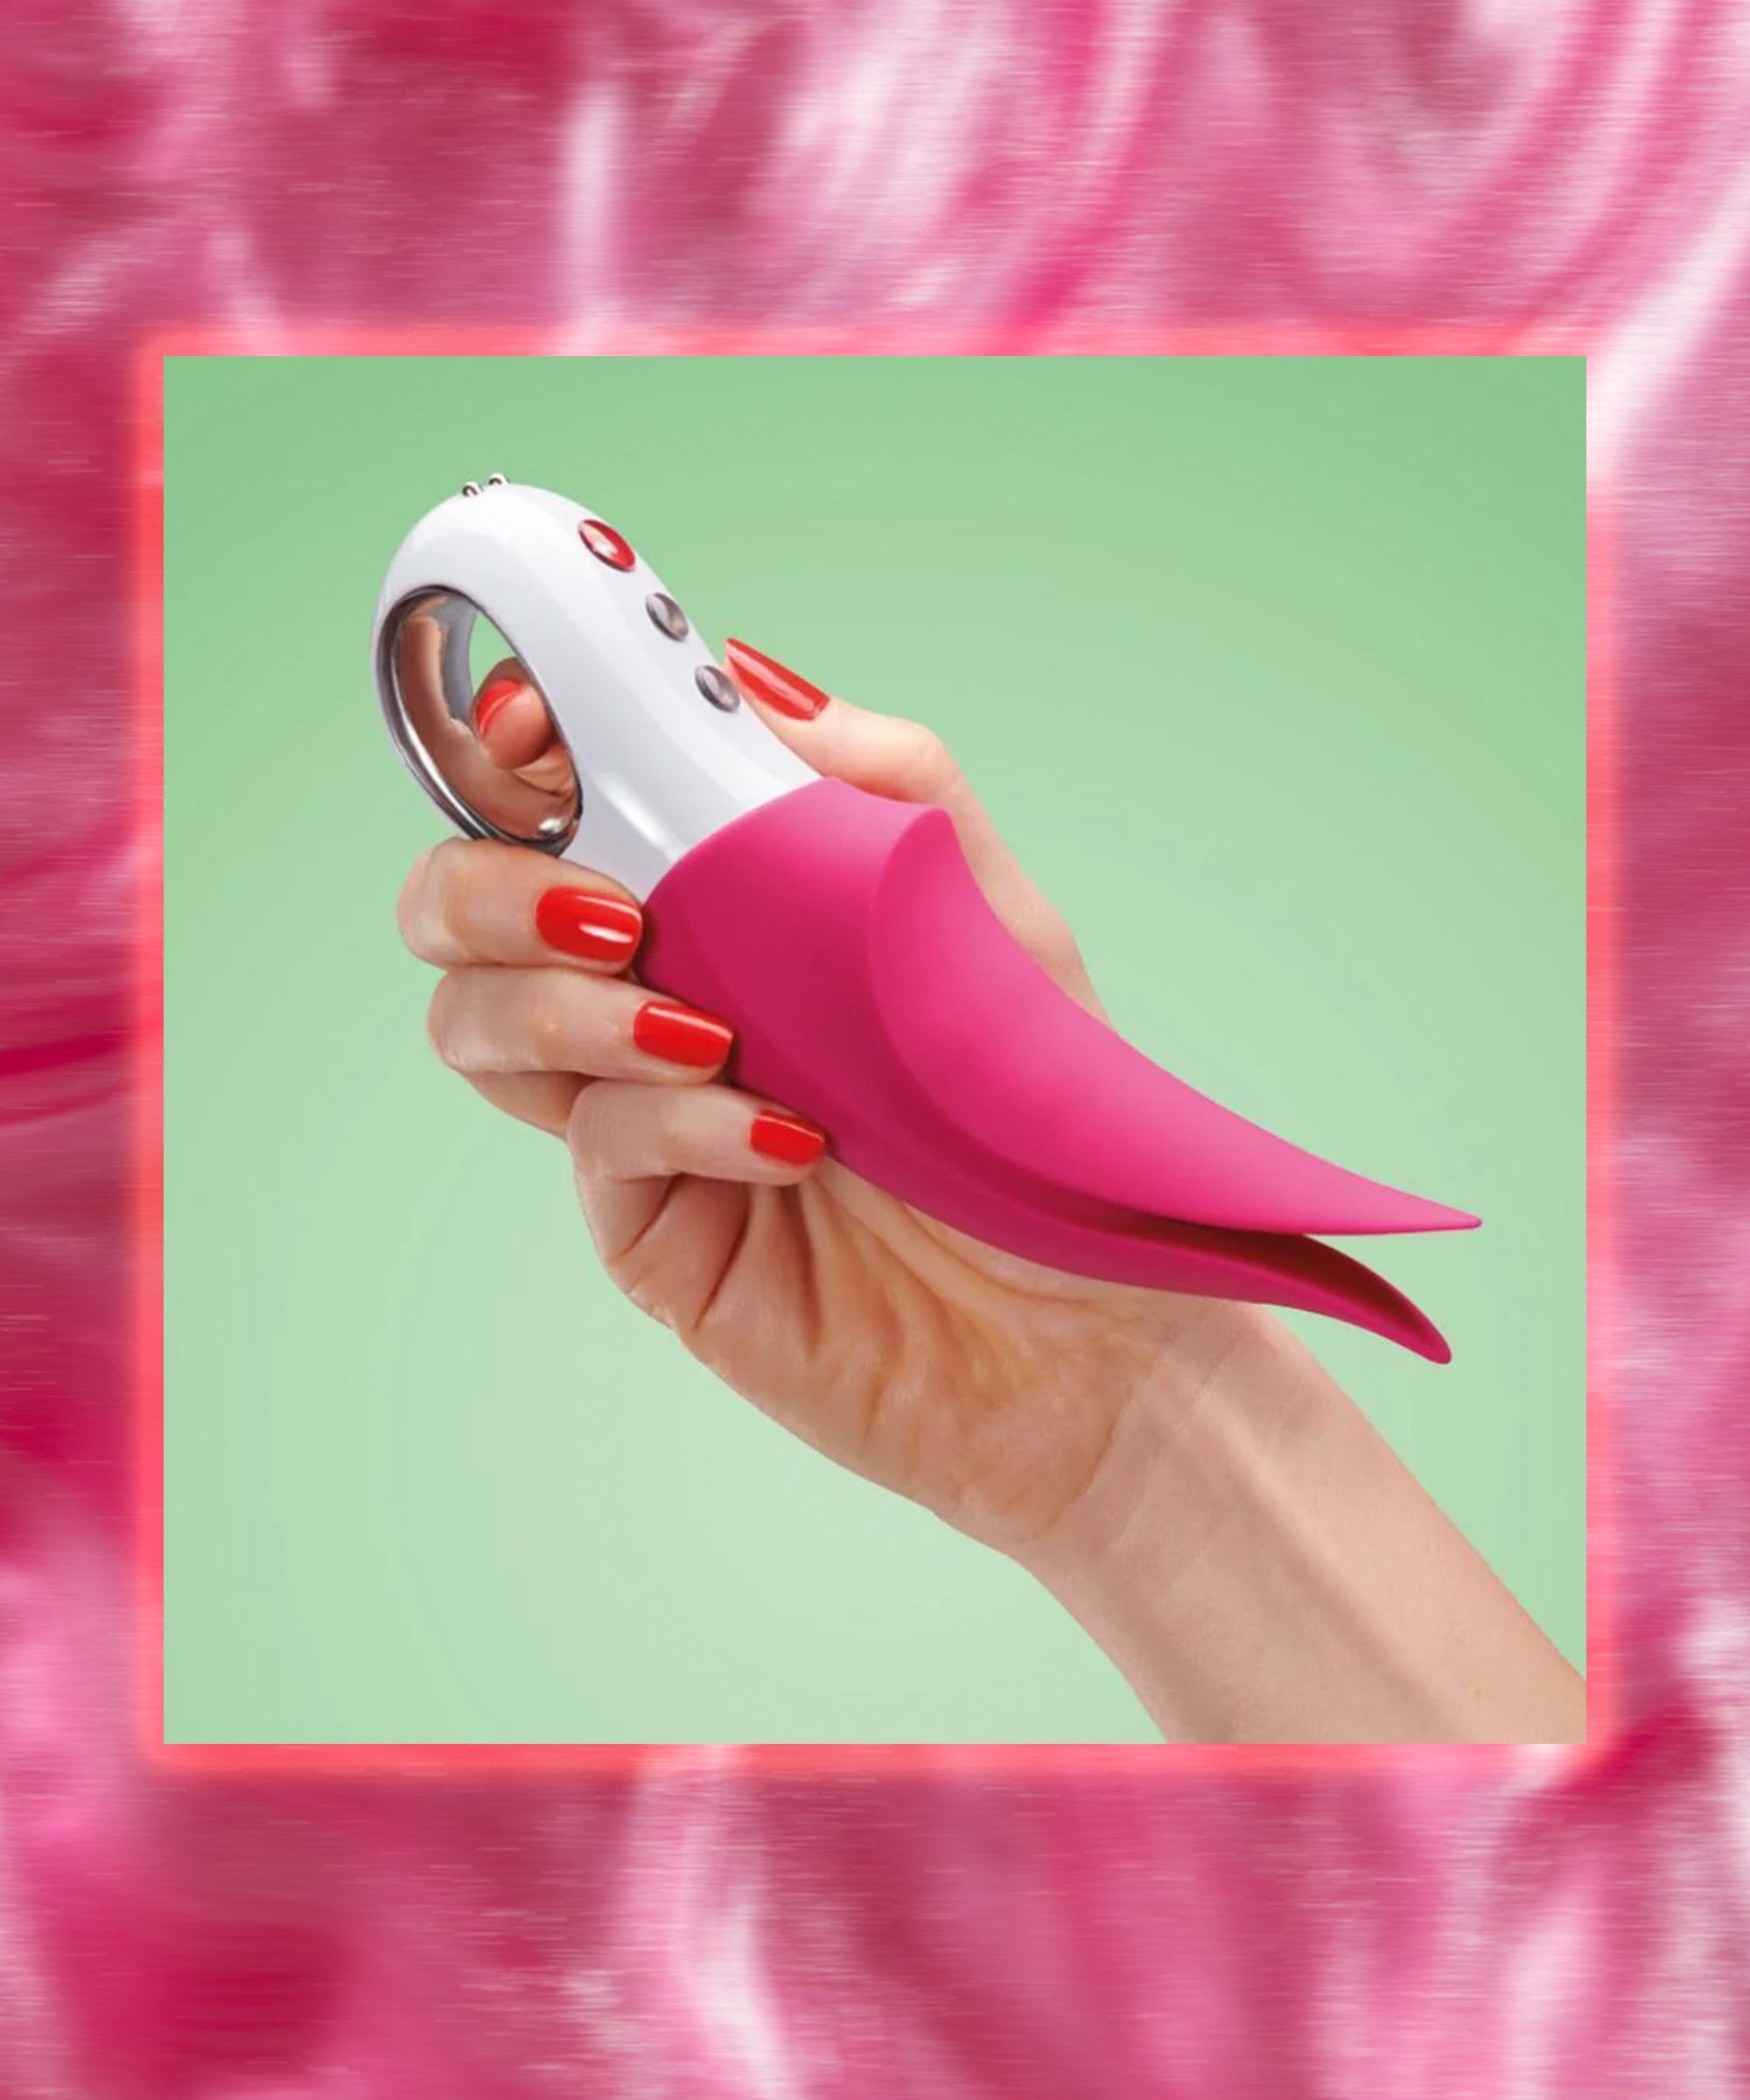 Rose-Toy-Vibrator-Clit-Sucker-Dildo-Women-G-spot-Massager-Sex-Toy-for-Women